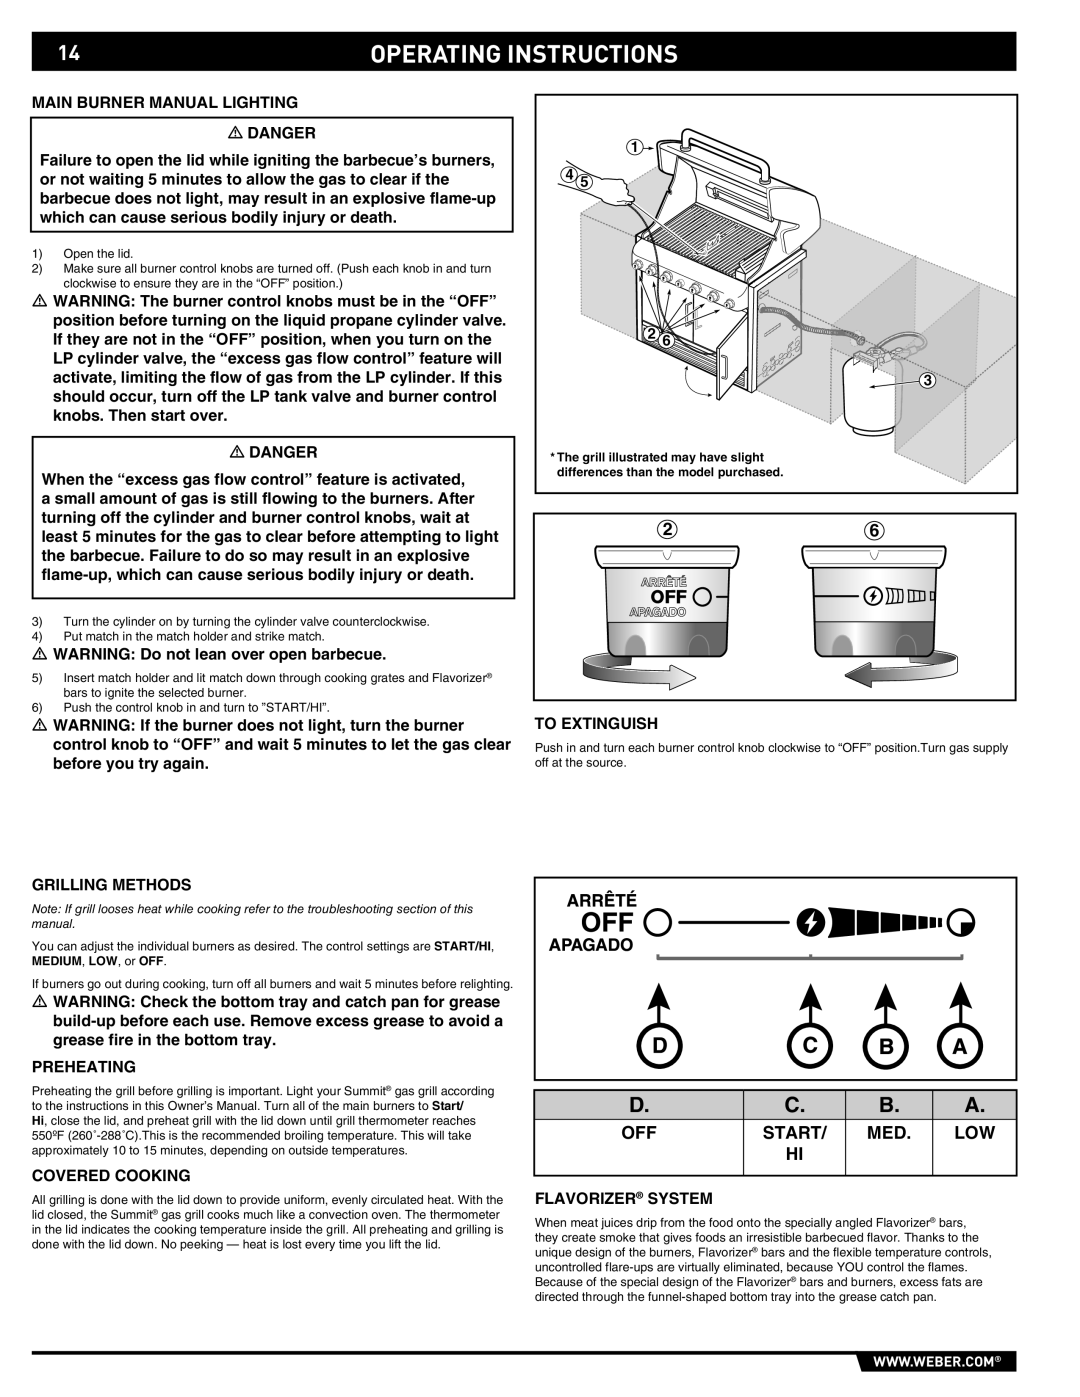 Weber S-460 manual Operating Instructions, Start 